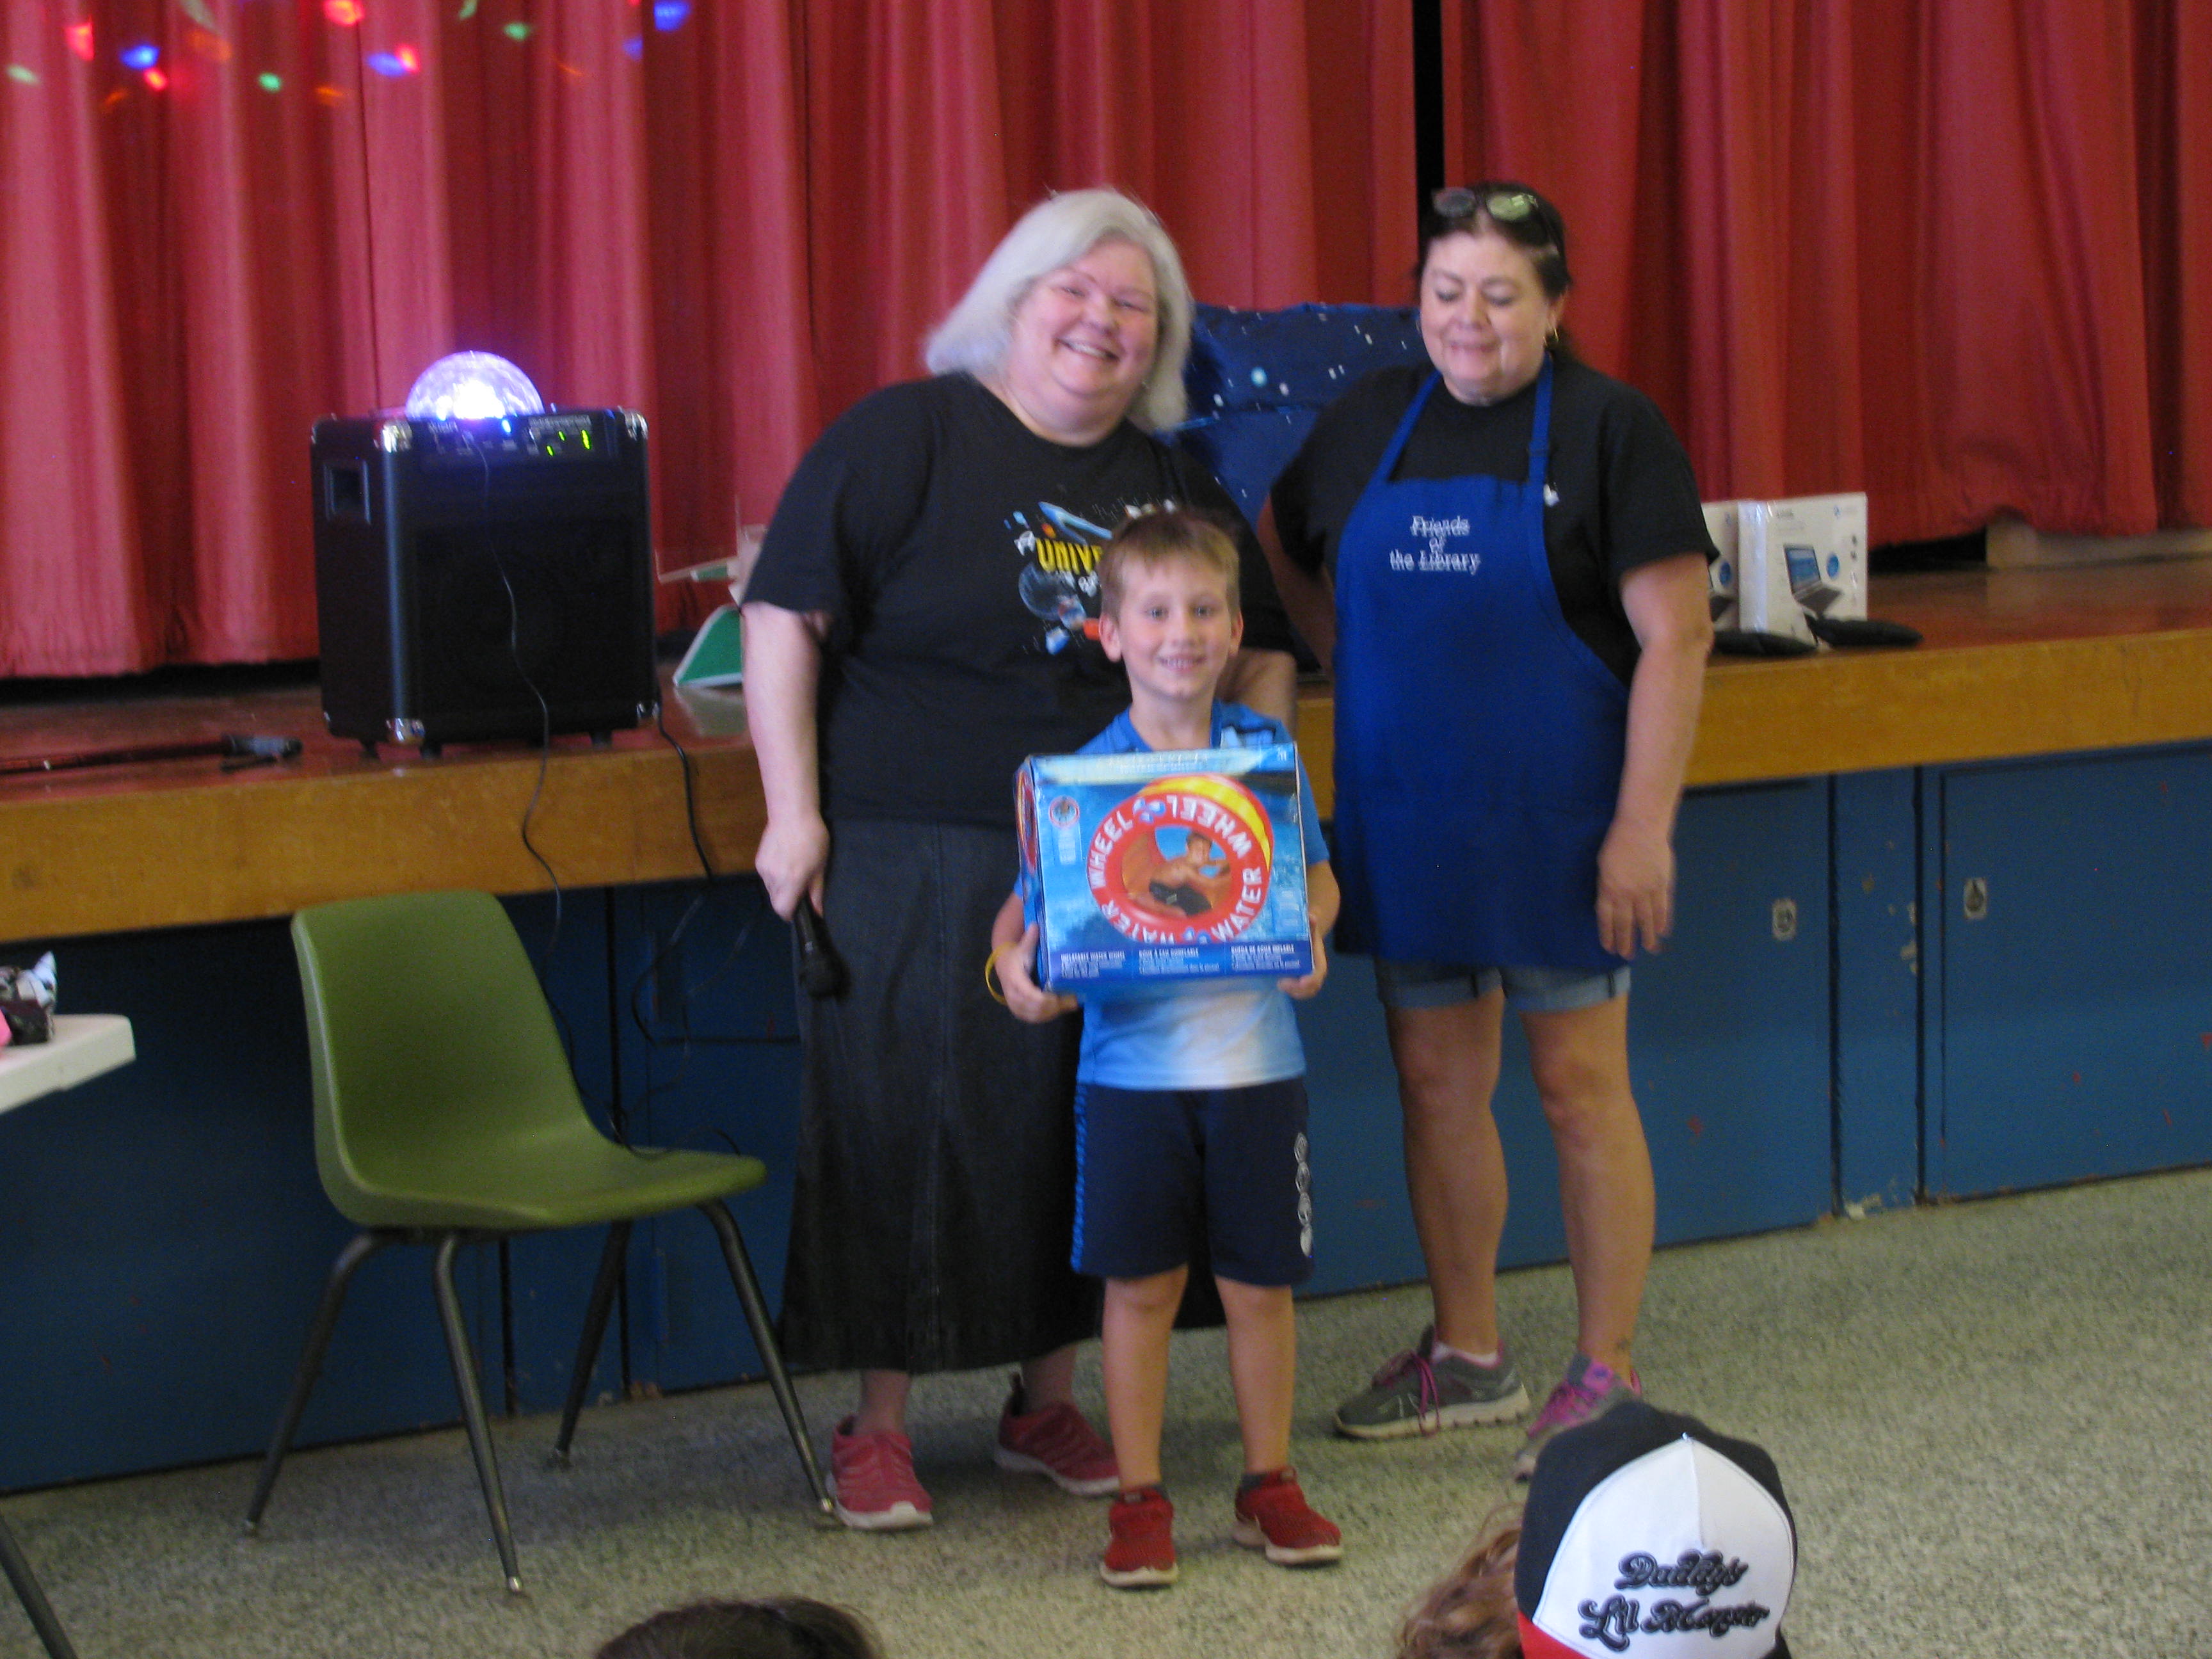 Carter won inflatable water wheel